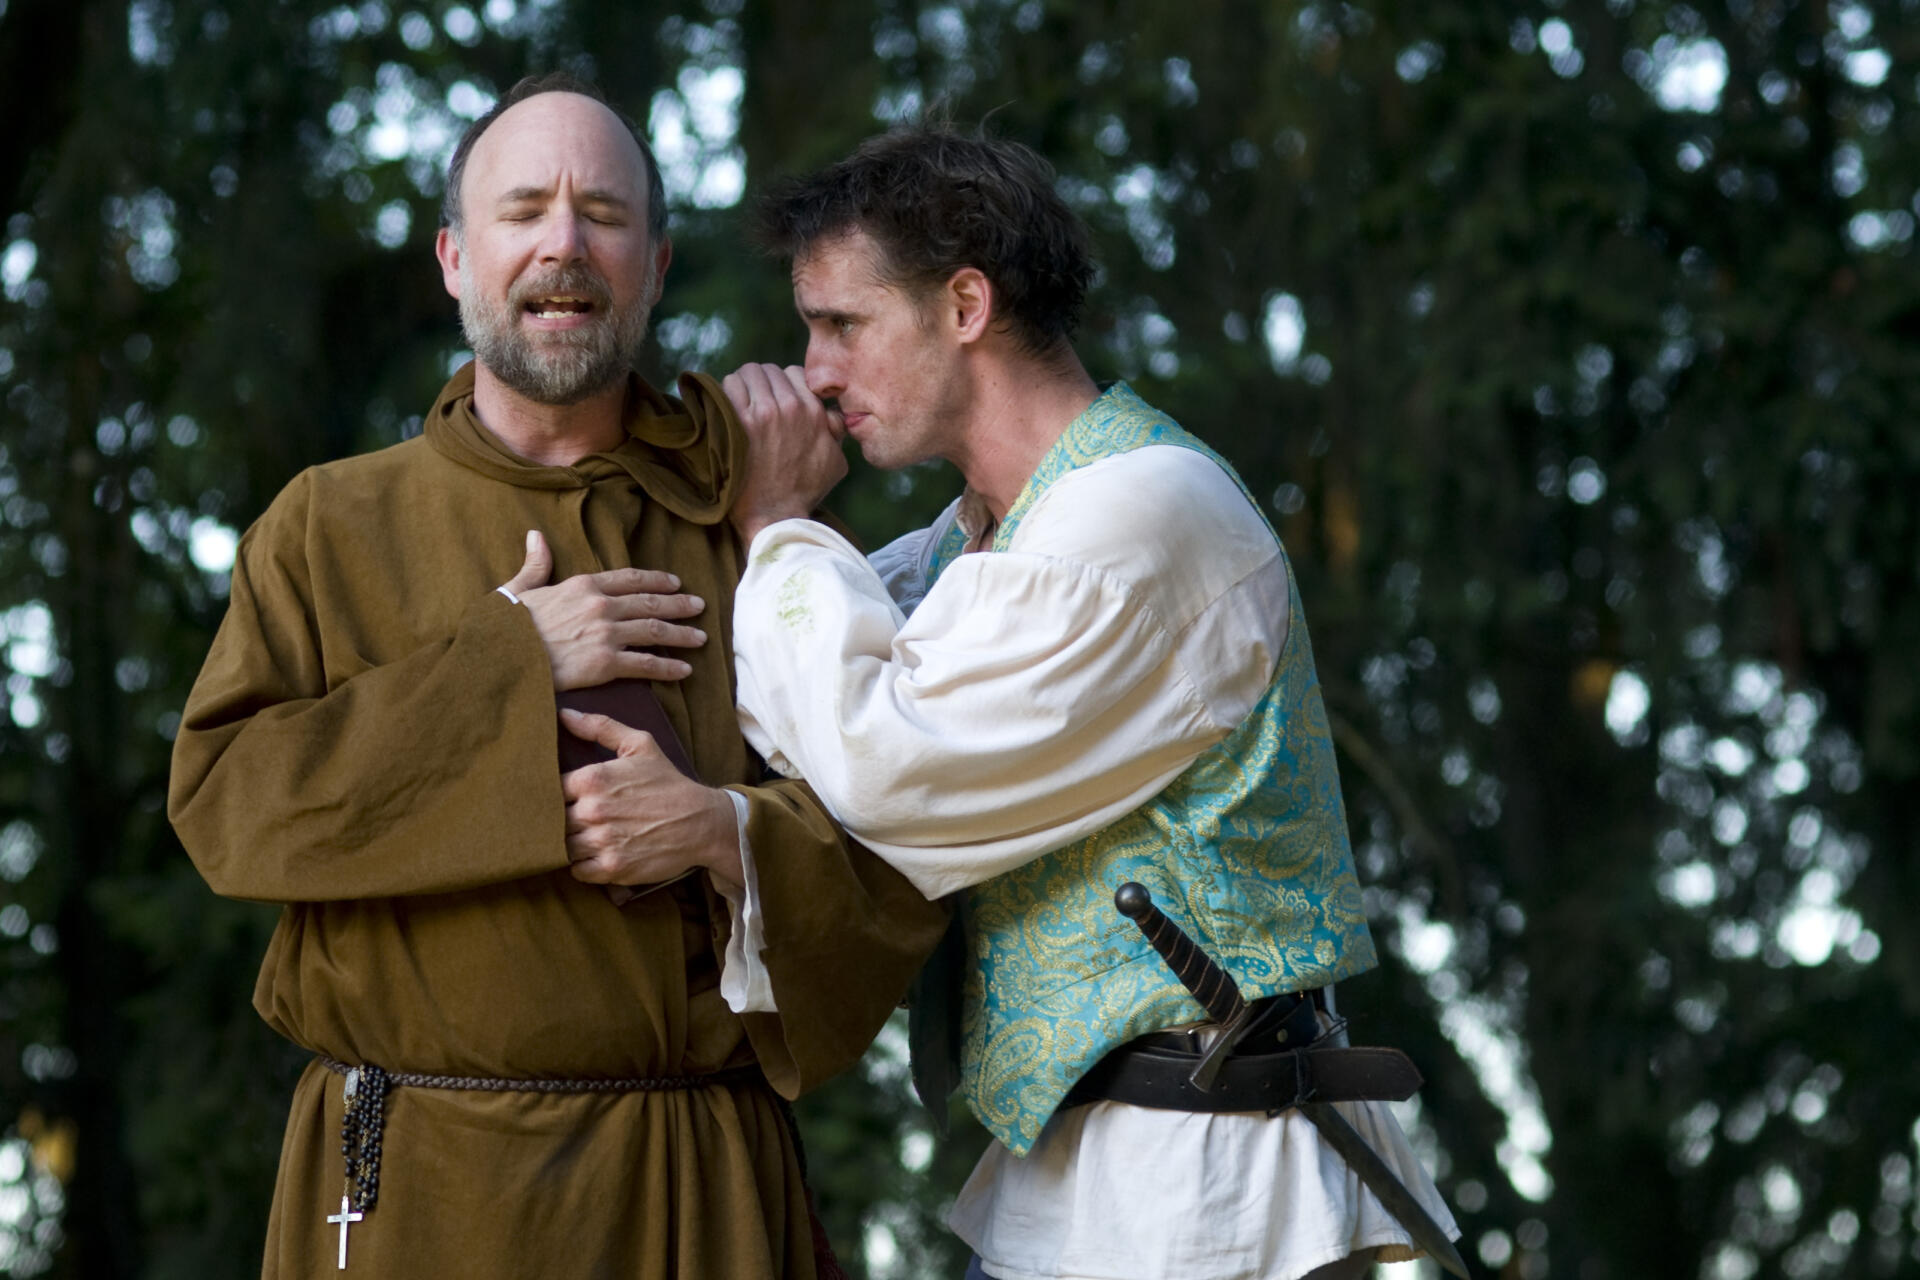 Eli Sklov Simons and Ryan Higgins in Romeo and Juliet - 2010